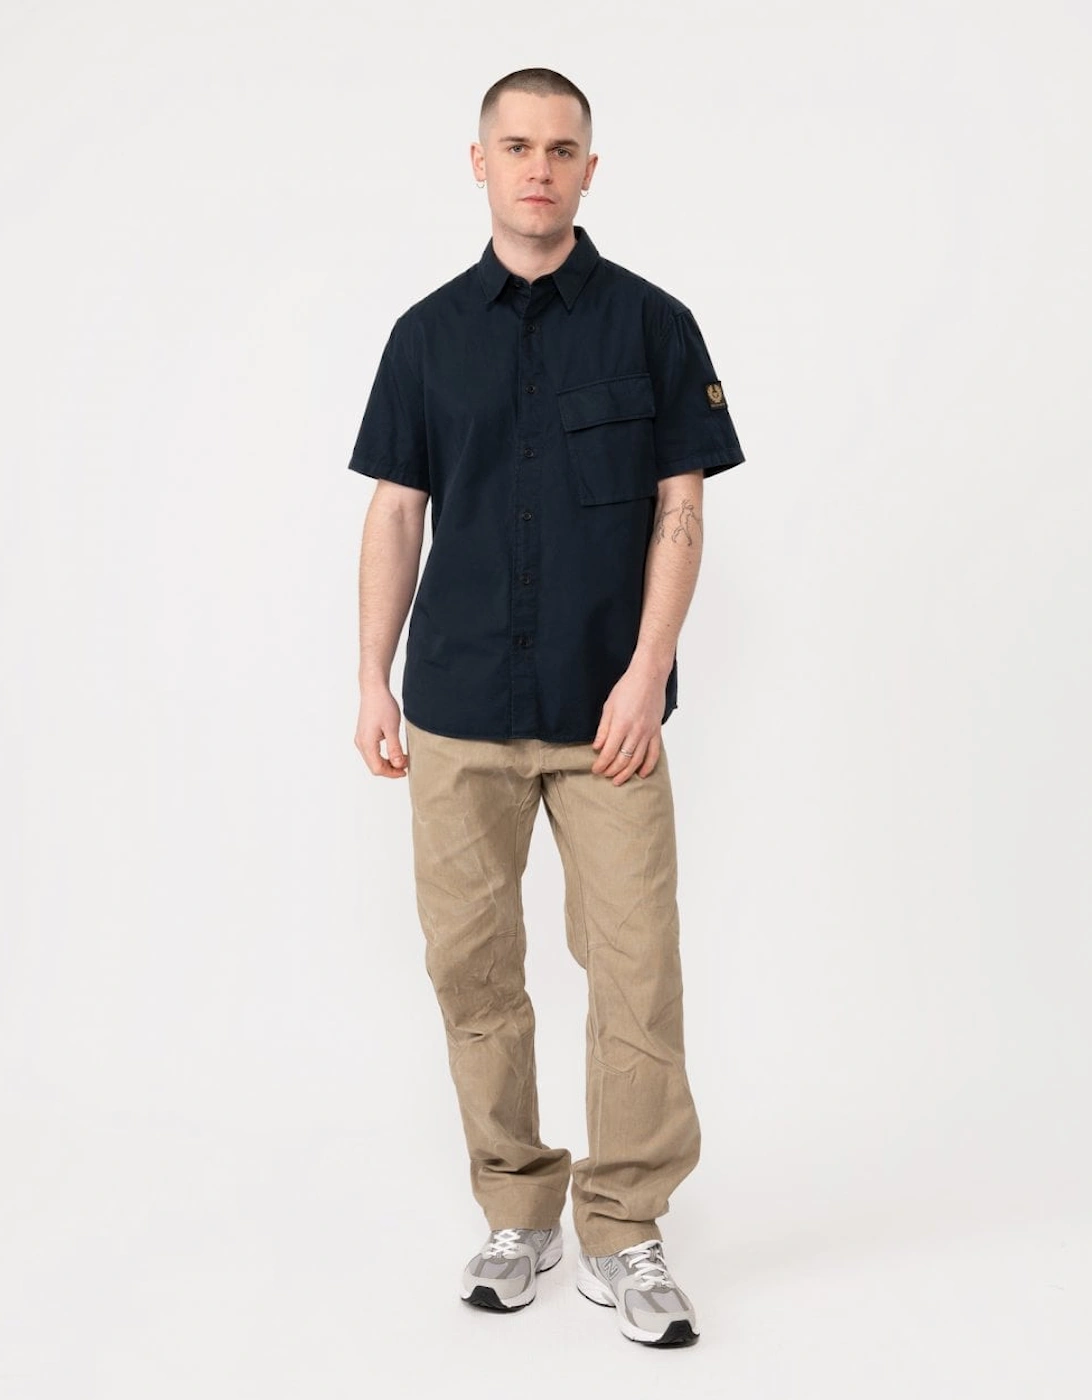 Scale Mens Short Sleeve Shirt